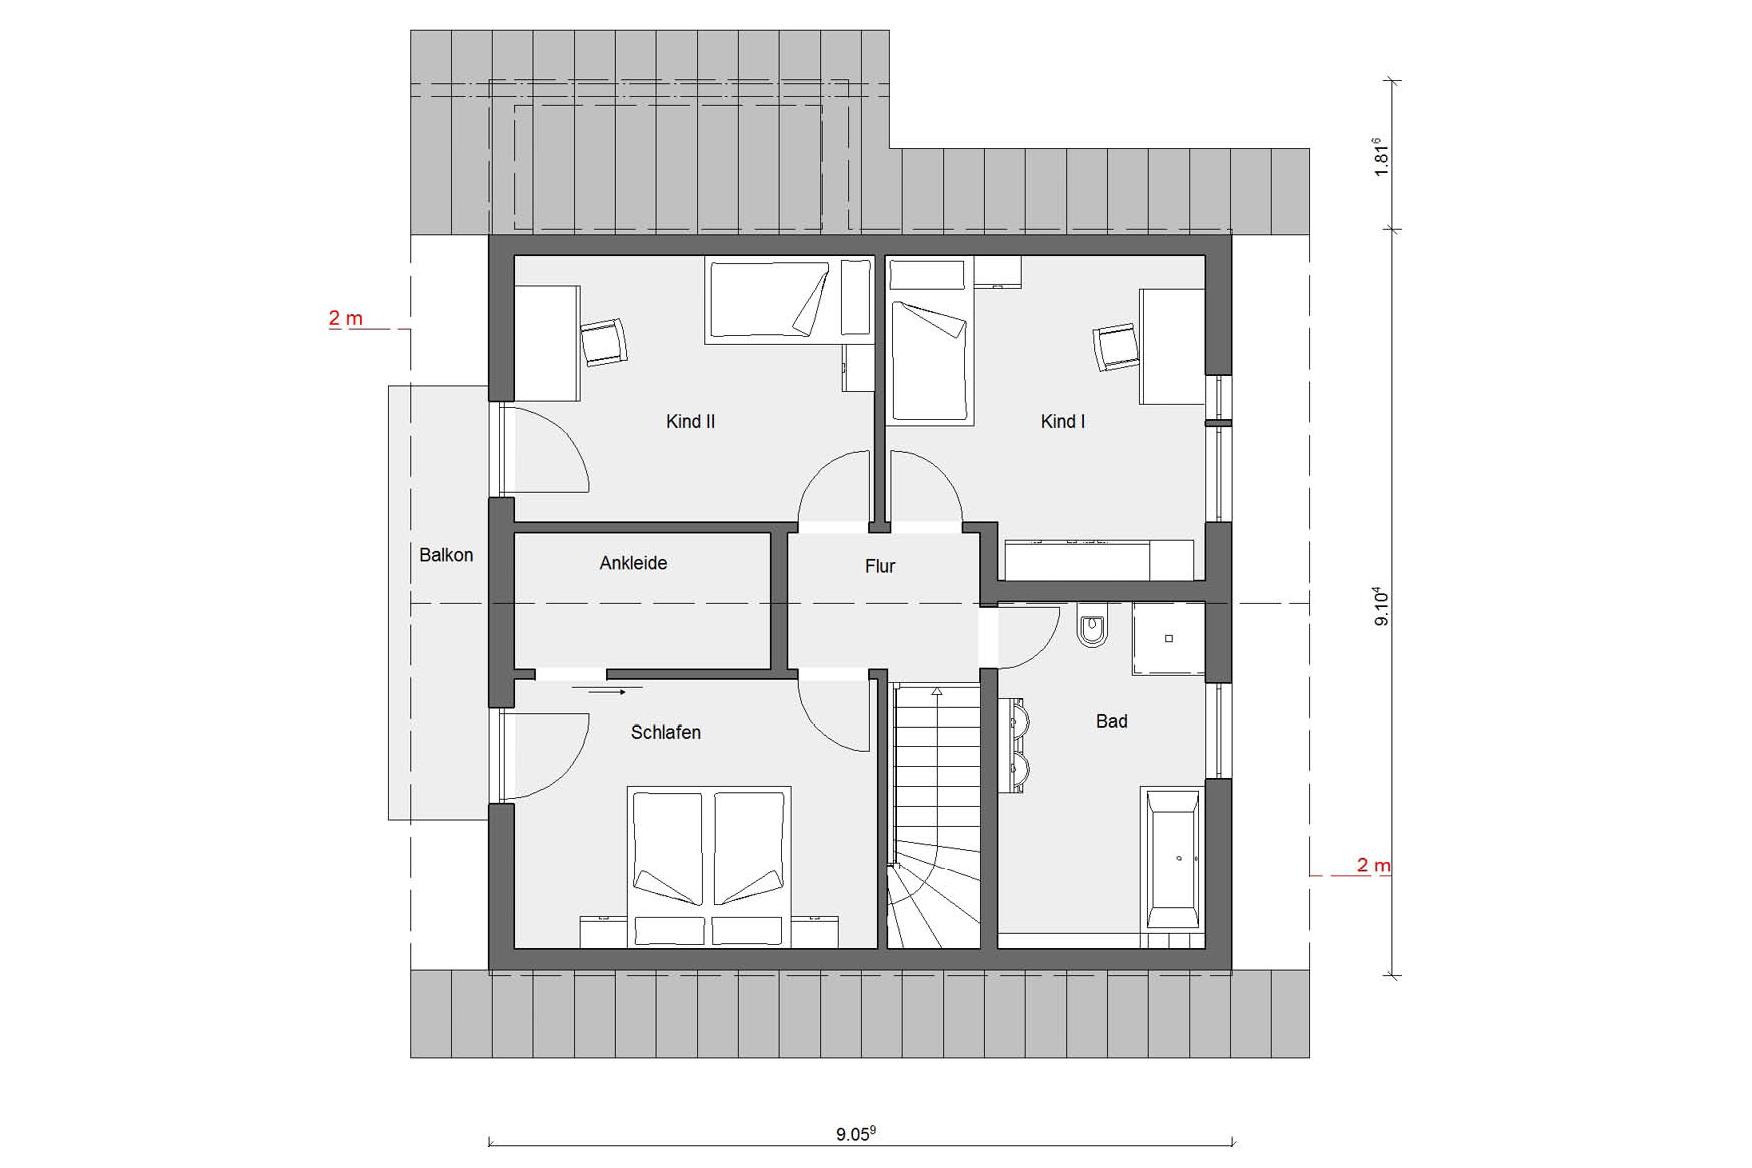 Floor plan attic E 15-141.3 Sonneninselhaus as country house